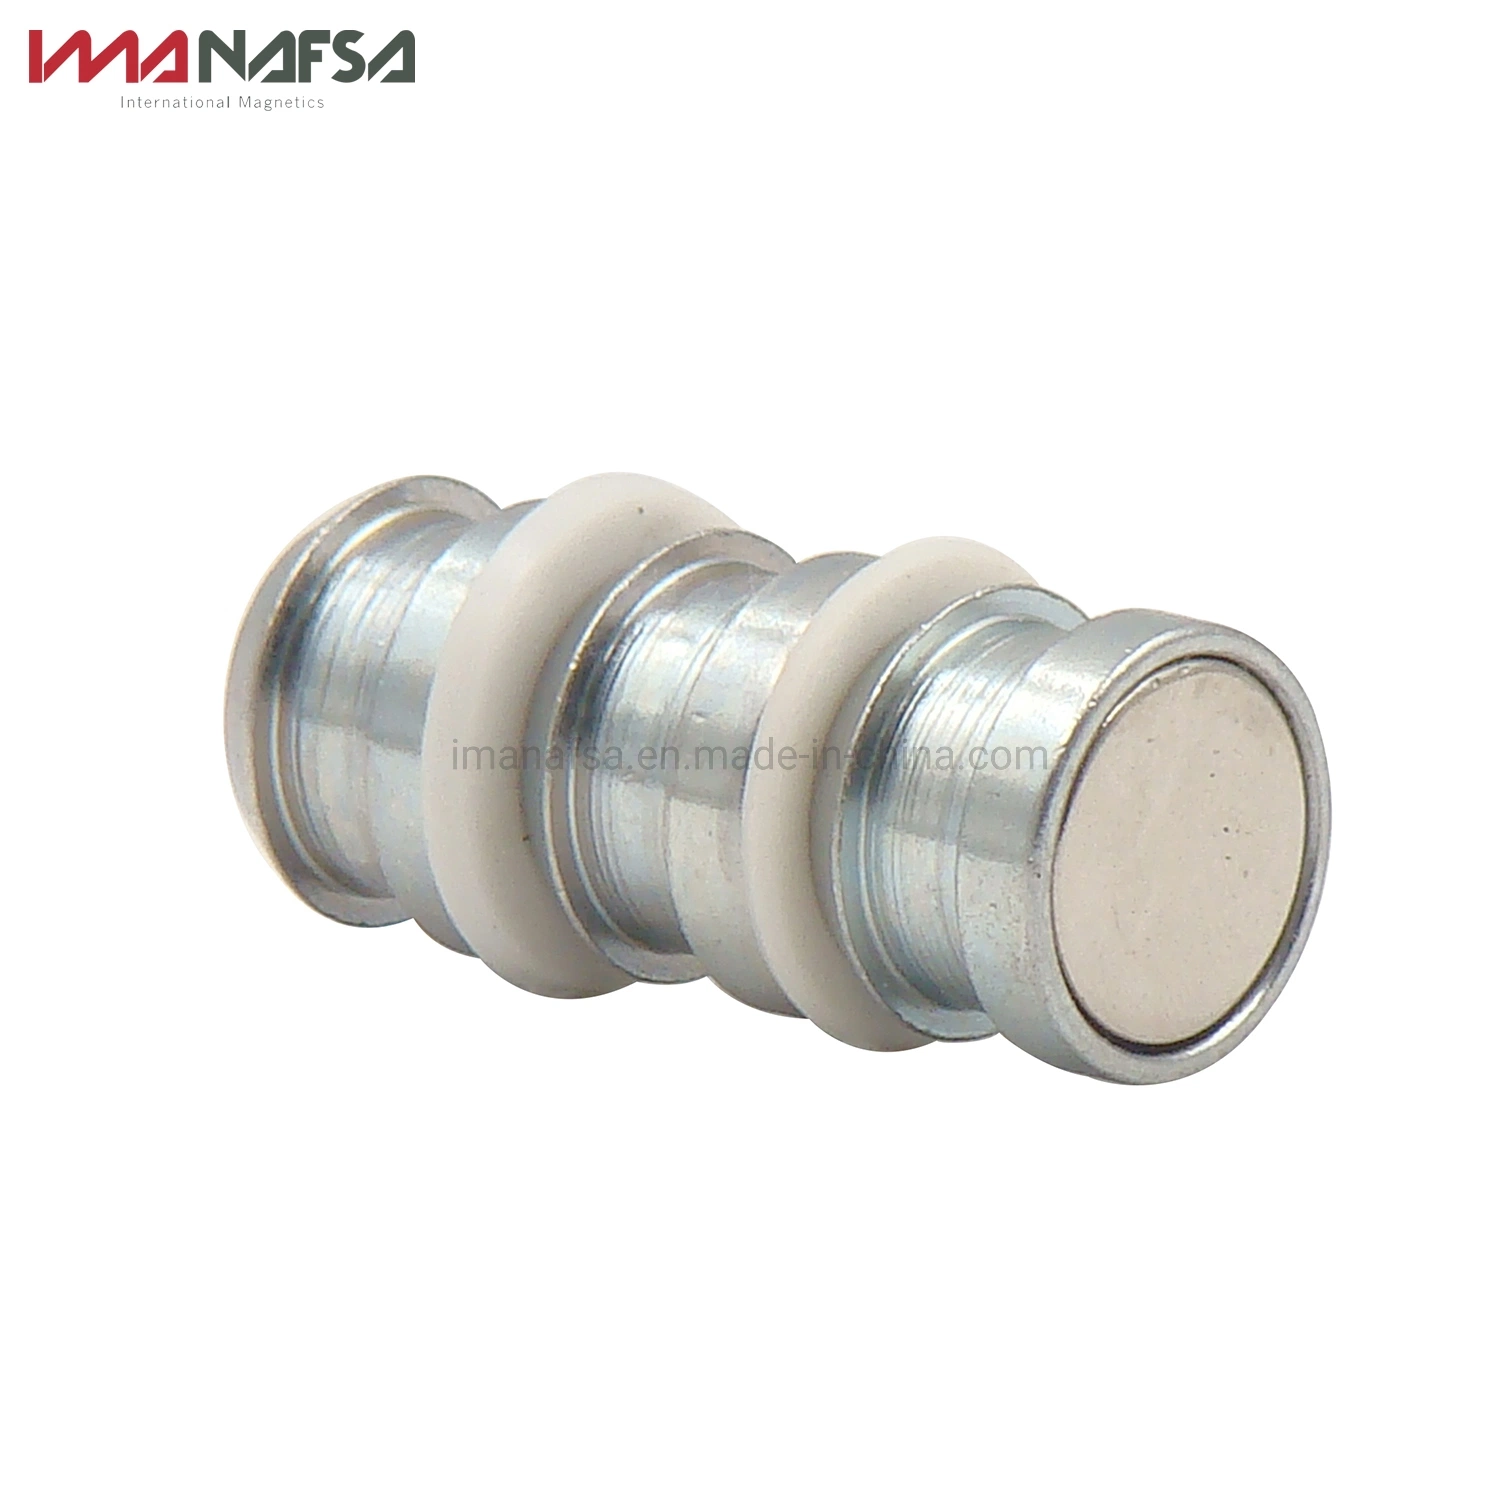 High Quality Small Powerful Irregular Permanent Neodymium Pot Magnets